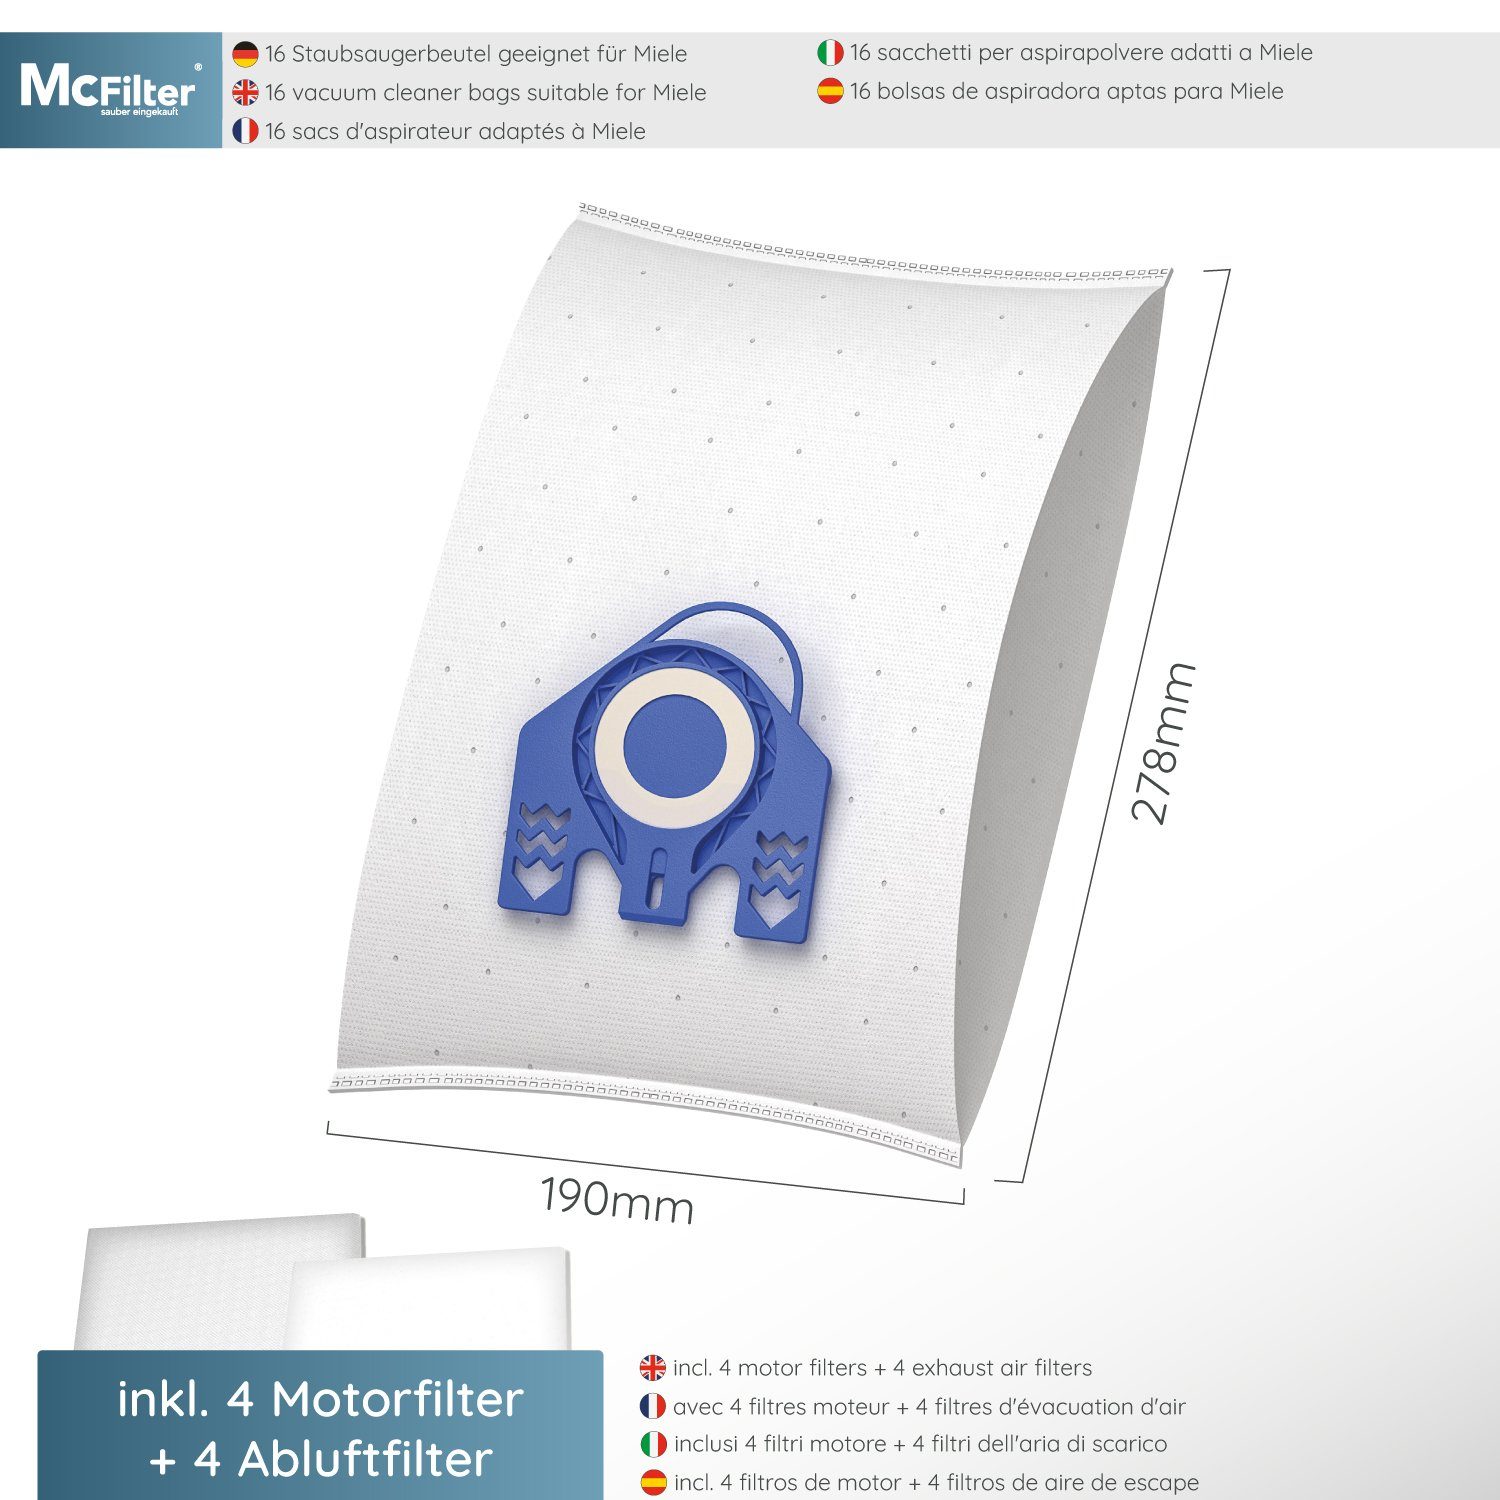 McFilter Staubsaugerbeutel (16+8), Miele >MAXI C1 Top BOX< St., Classic passend zu für 16 8 10408410 Serie Miele wie Alternative Ecoline Staubsauger, 9917730, inkl. Filter